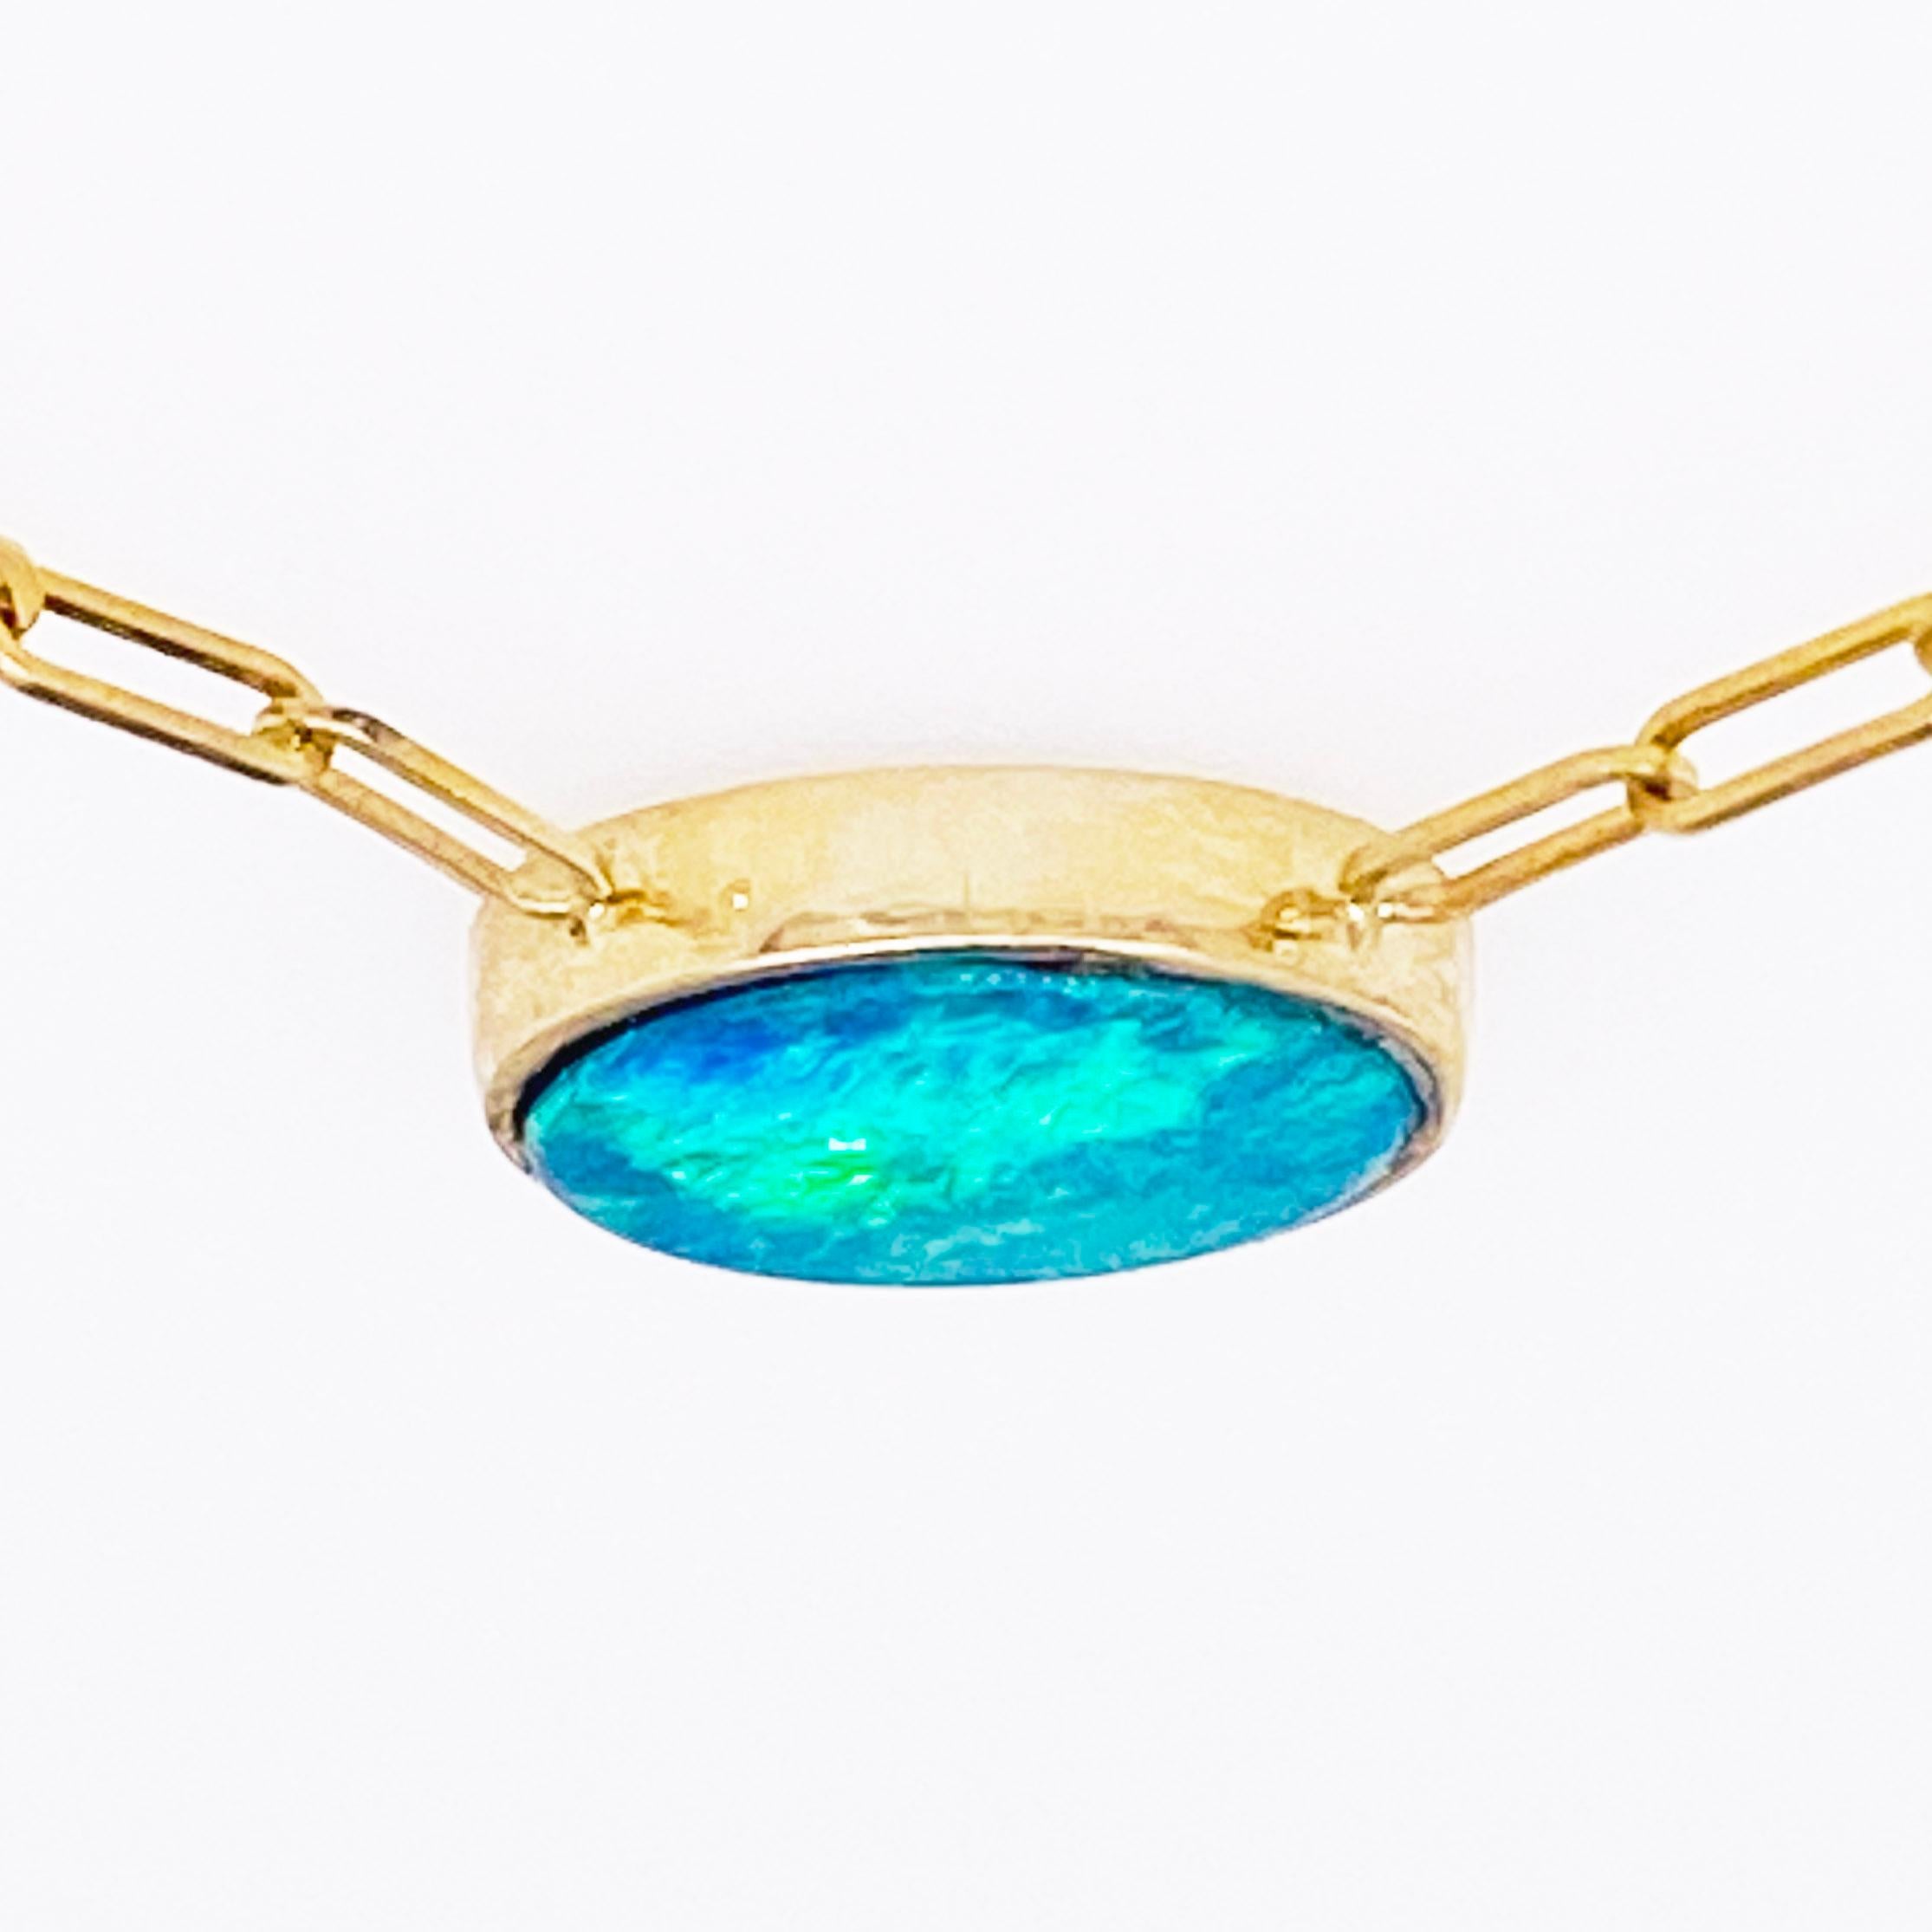 Blauer Opal Halskette, 14k Gold Paperclip Kette, Papierklammer-Halskette, Anhänger, Blau (Moderne)